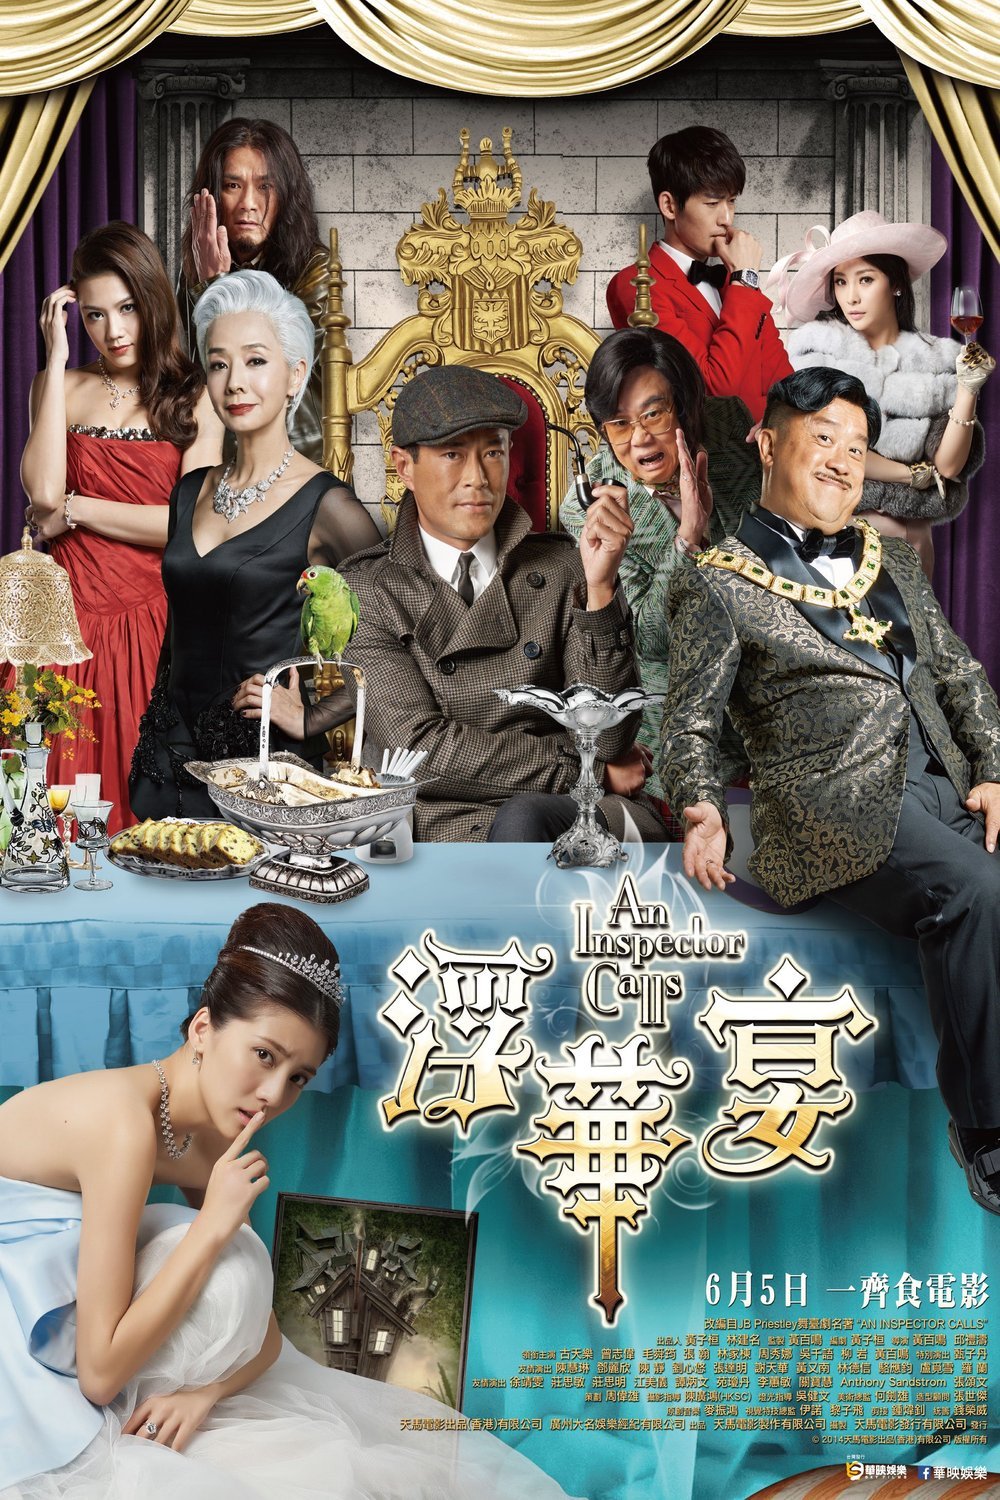 Cantonese poster of the movie Fau wa yin